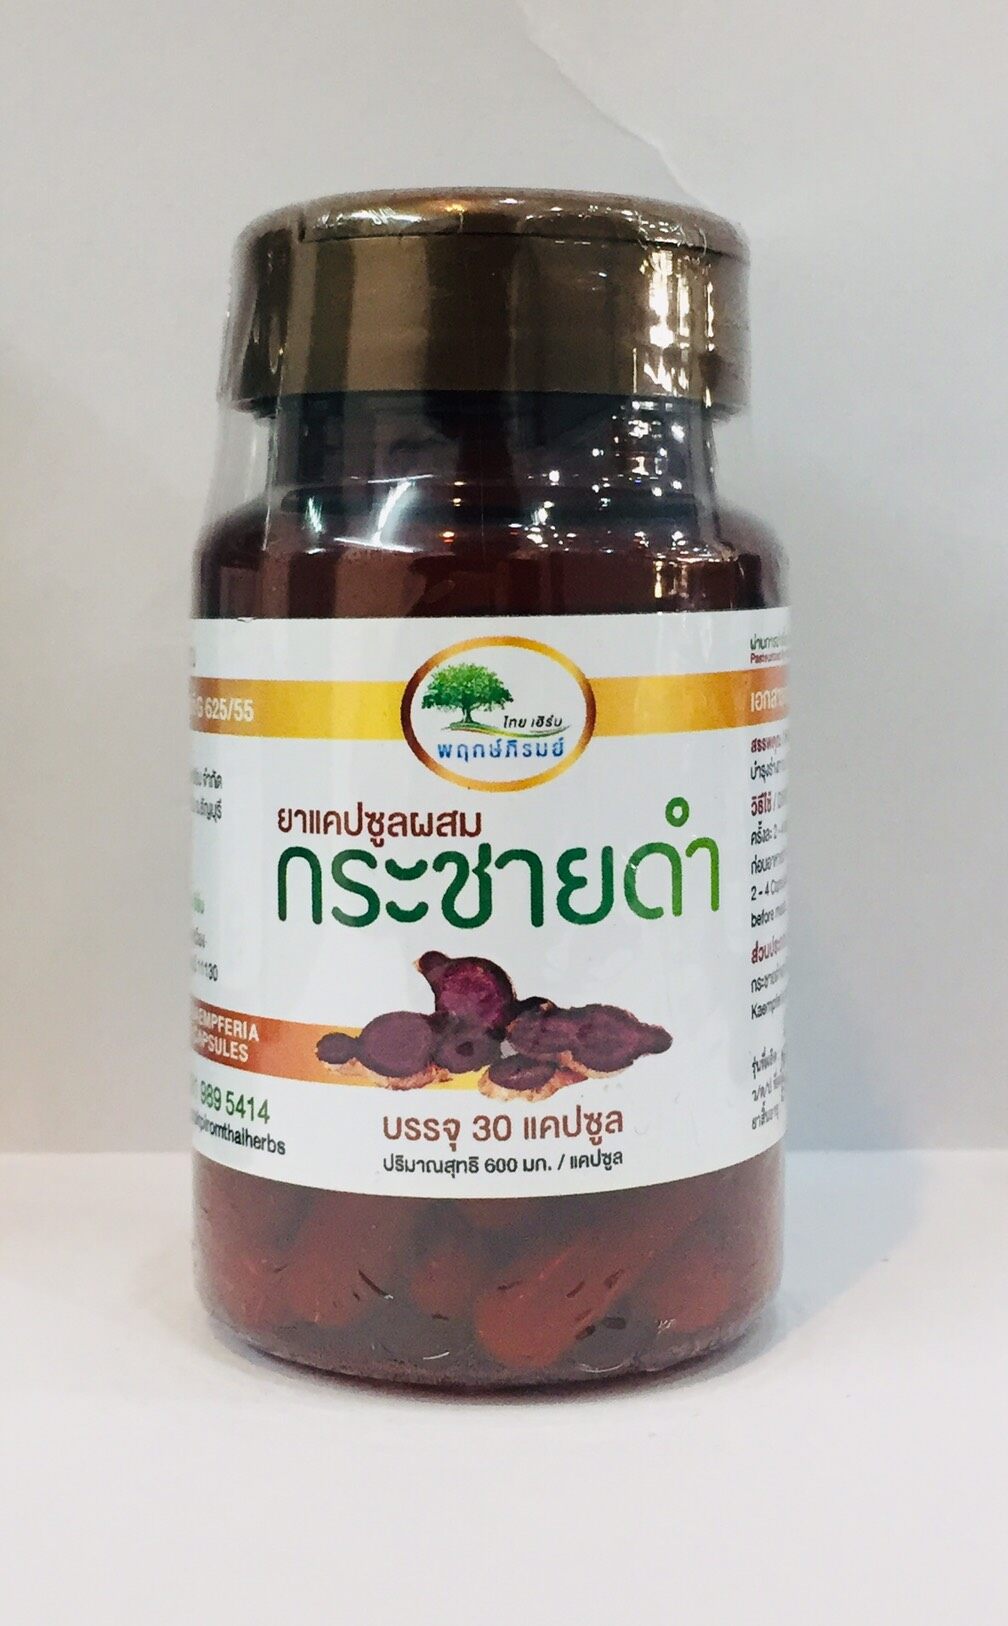 Prukpirom Thai Herbs กระชายดำ บำรุงร่างกายชาย สูตรตำรับชนิดแคปซูล(30 แคป/ขวด) ทะเบียนตำรับ อย. G 625/55